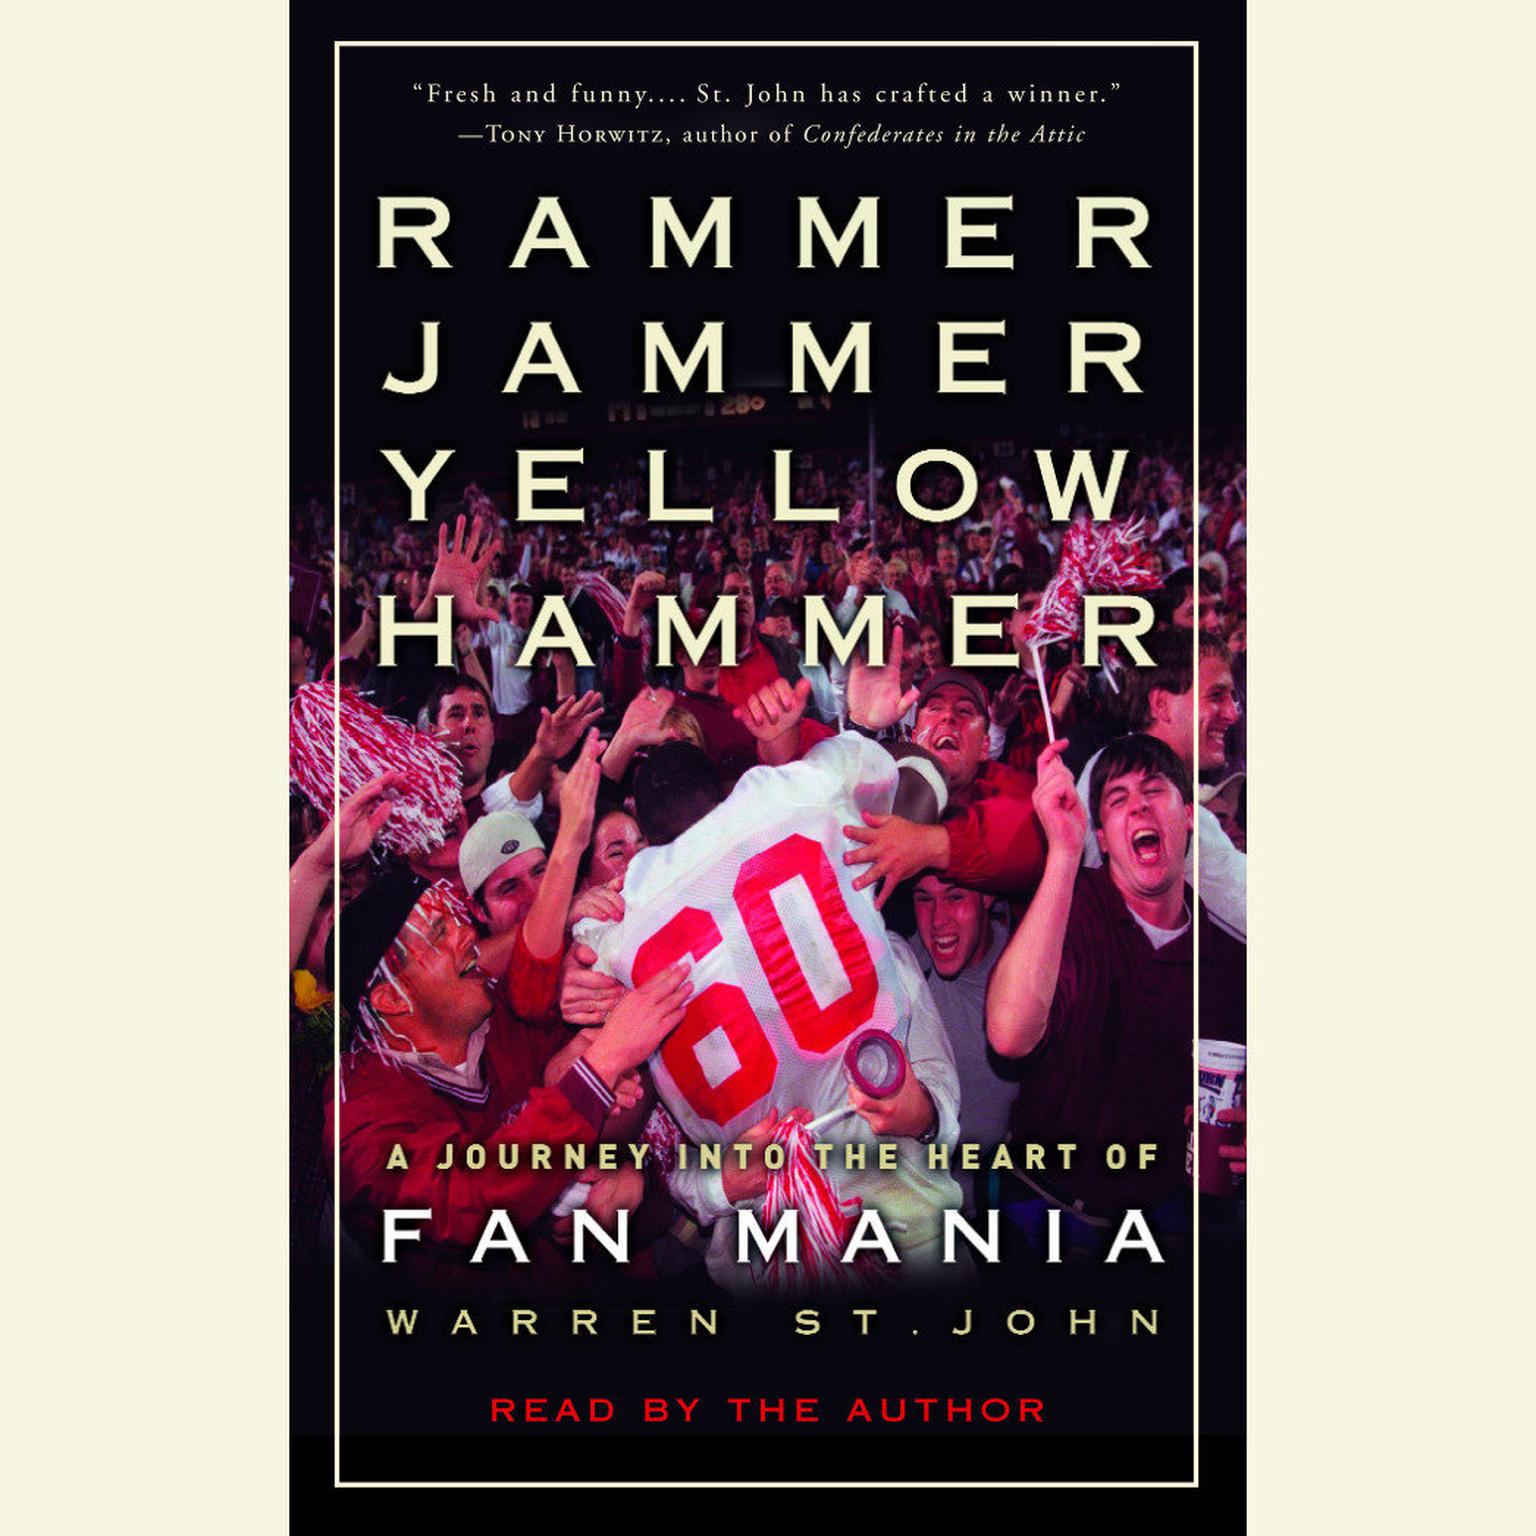 Rammer Jammer Yellow Hammer (Abridged): A Journey into the Heart of Fan Mania Audiobook, by Warren St. John